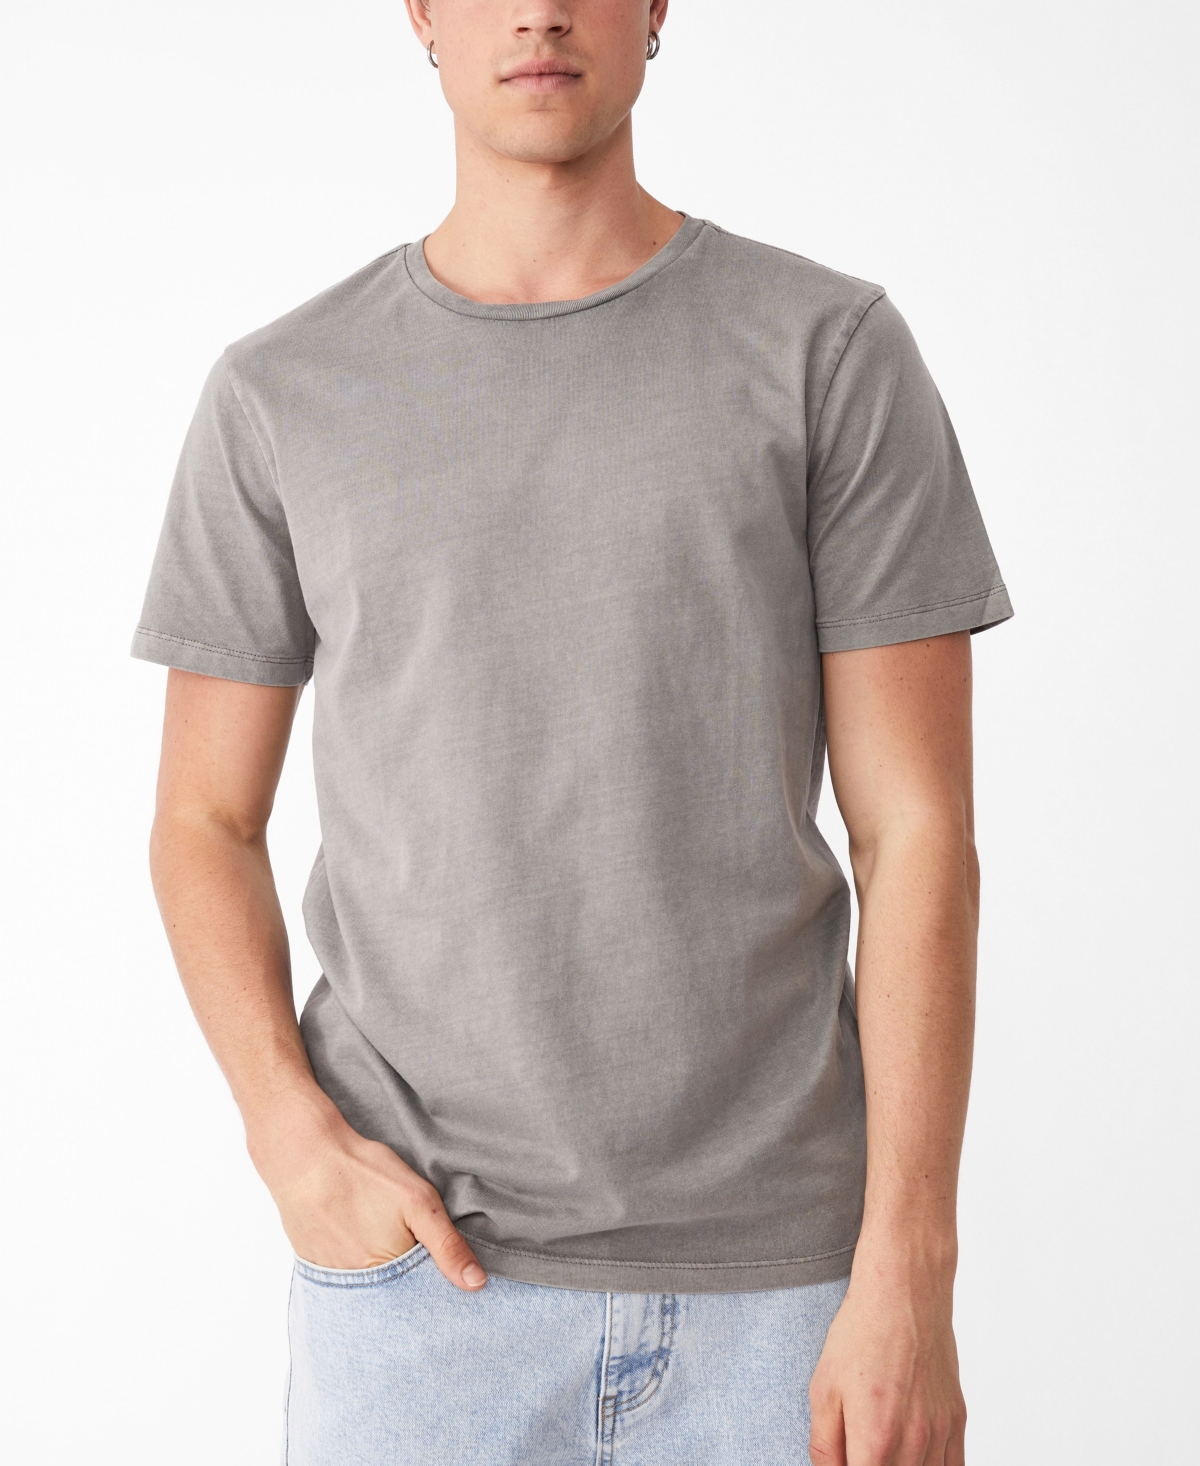 Cotton On Men's Regular Fit Crew T-shirt In Gray